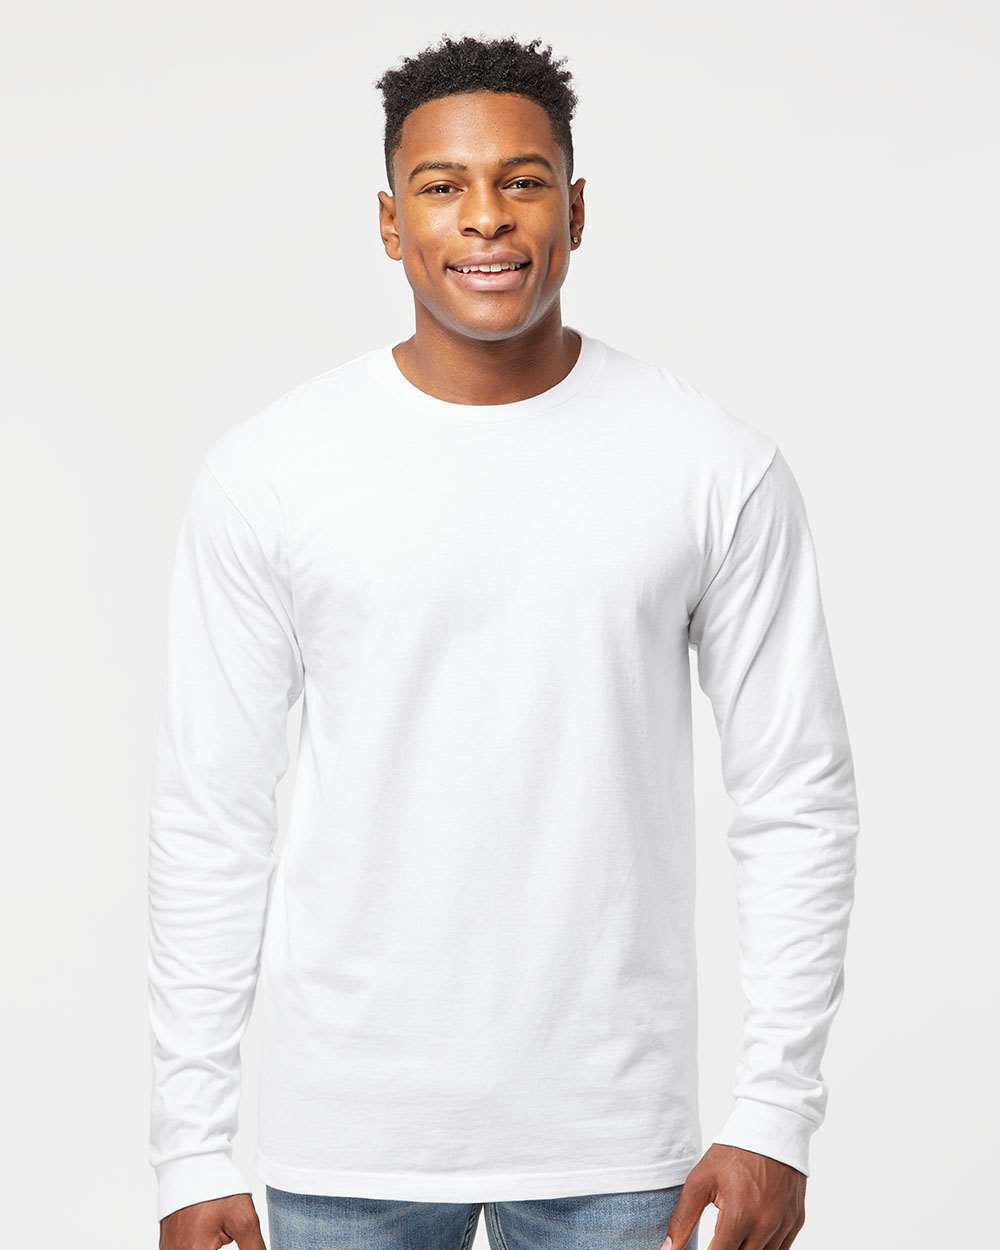 Tultex 291 Unisex Jersey Long Sleeve T-Shirt